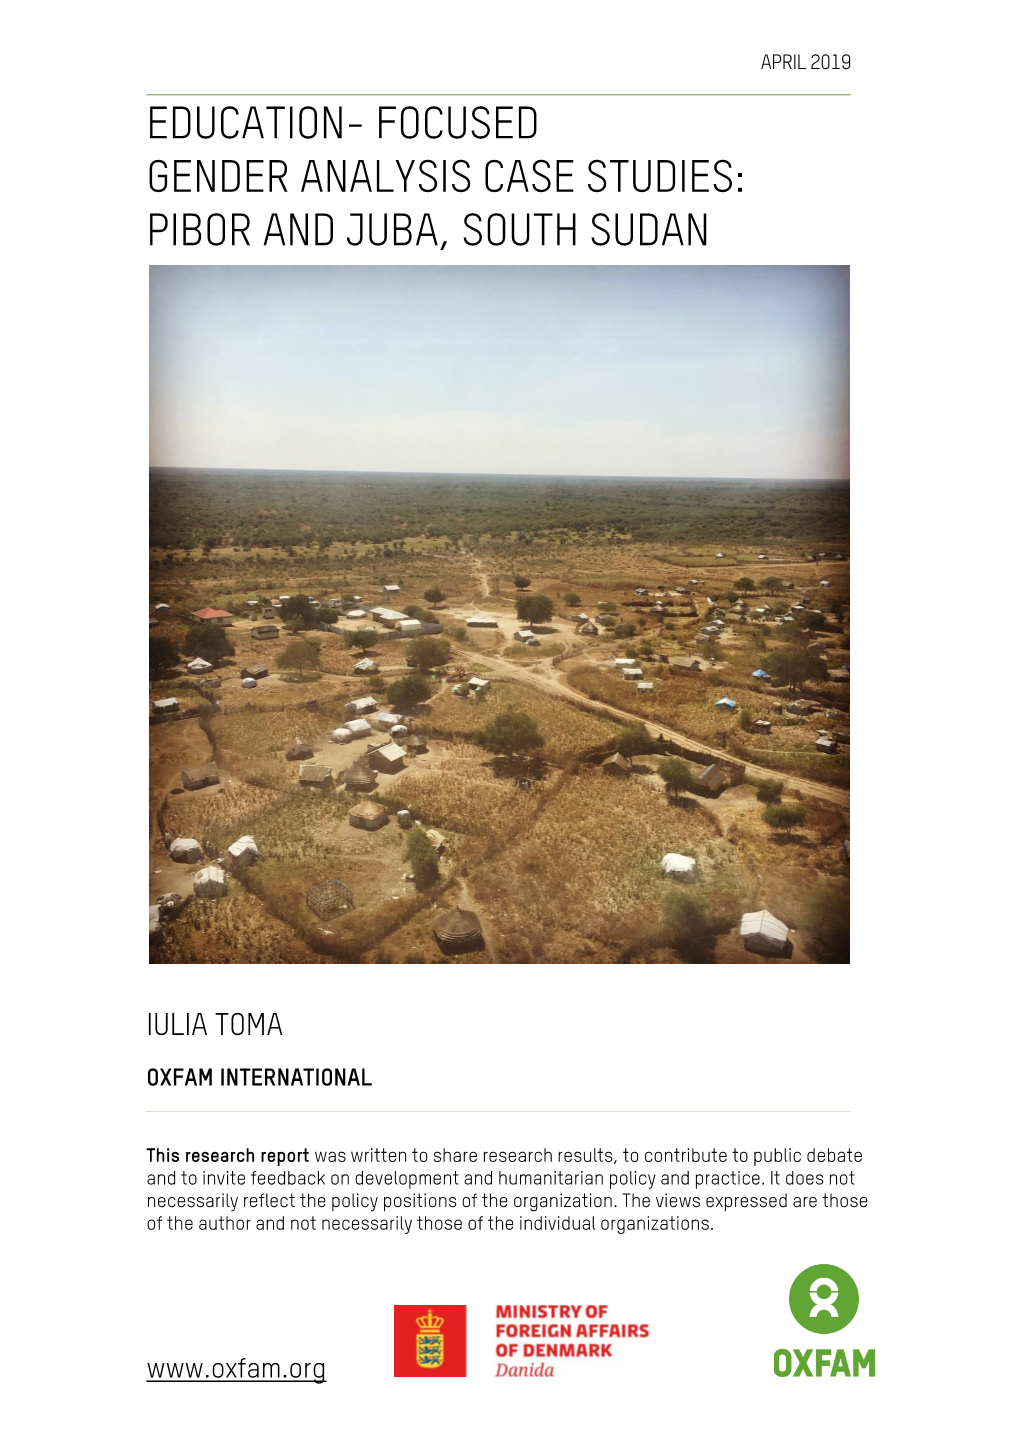 Pibor and Juba, South Sudan